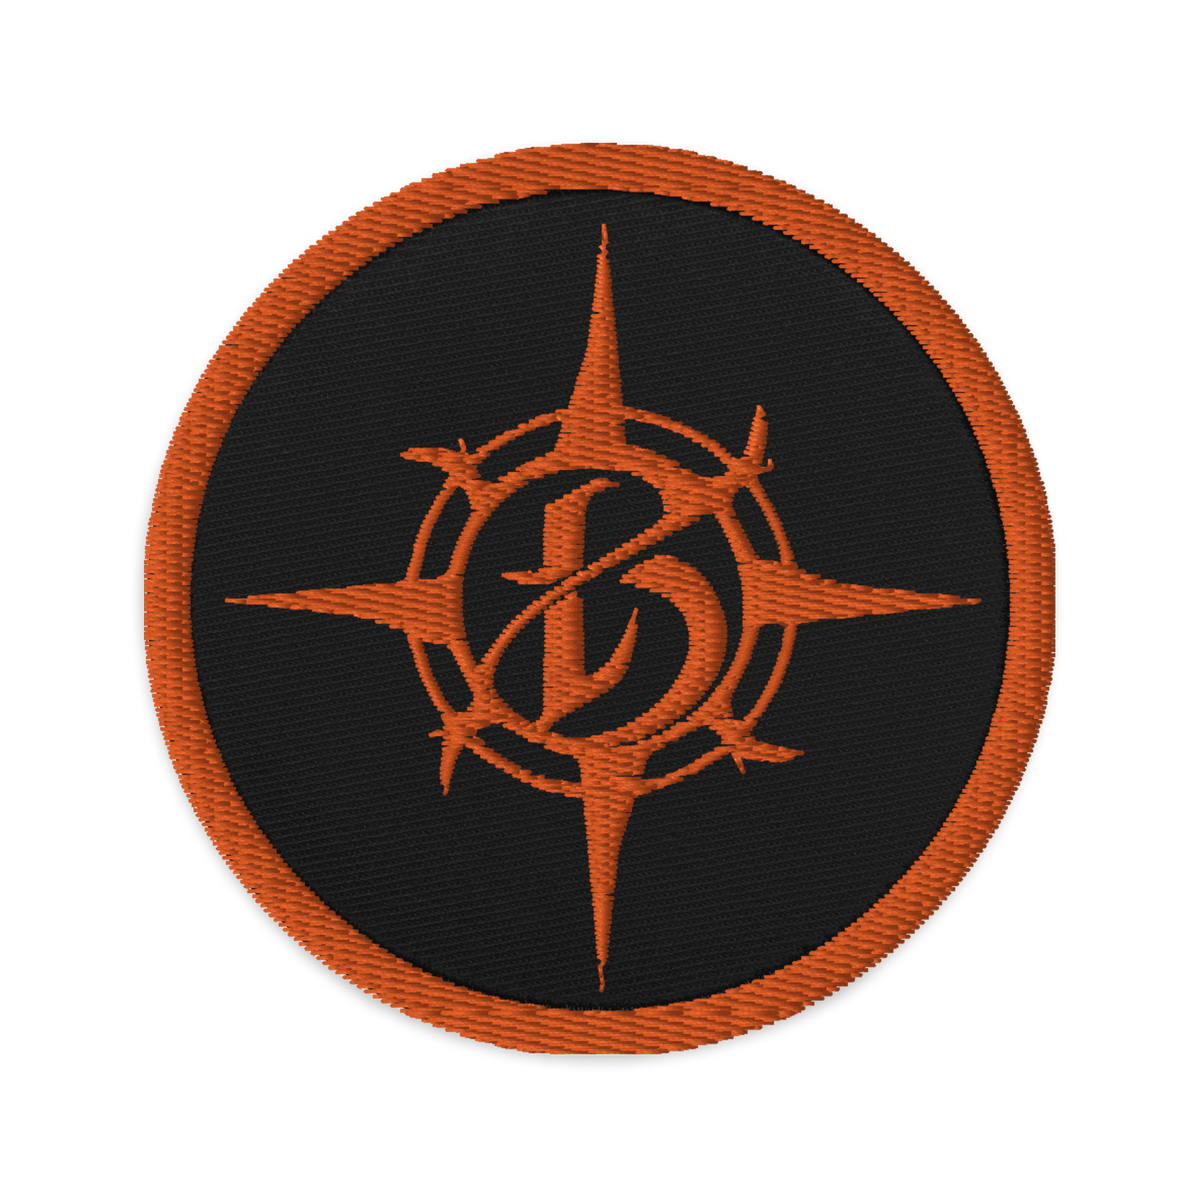 Borealis Compass Logo Embroidered Patch - Orange